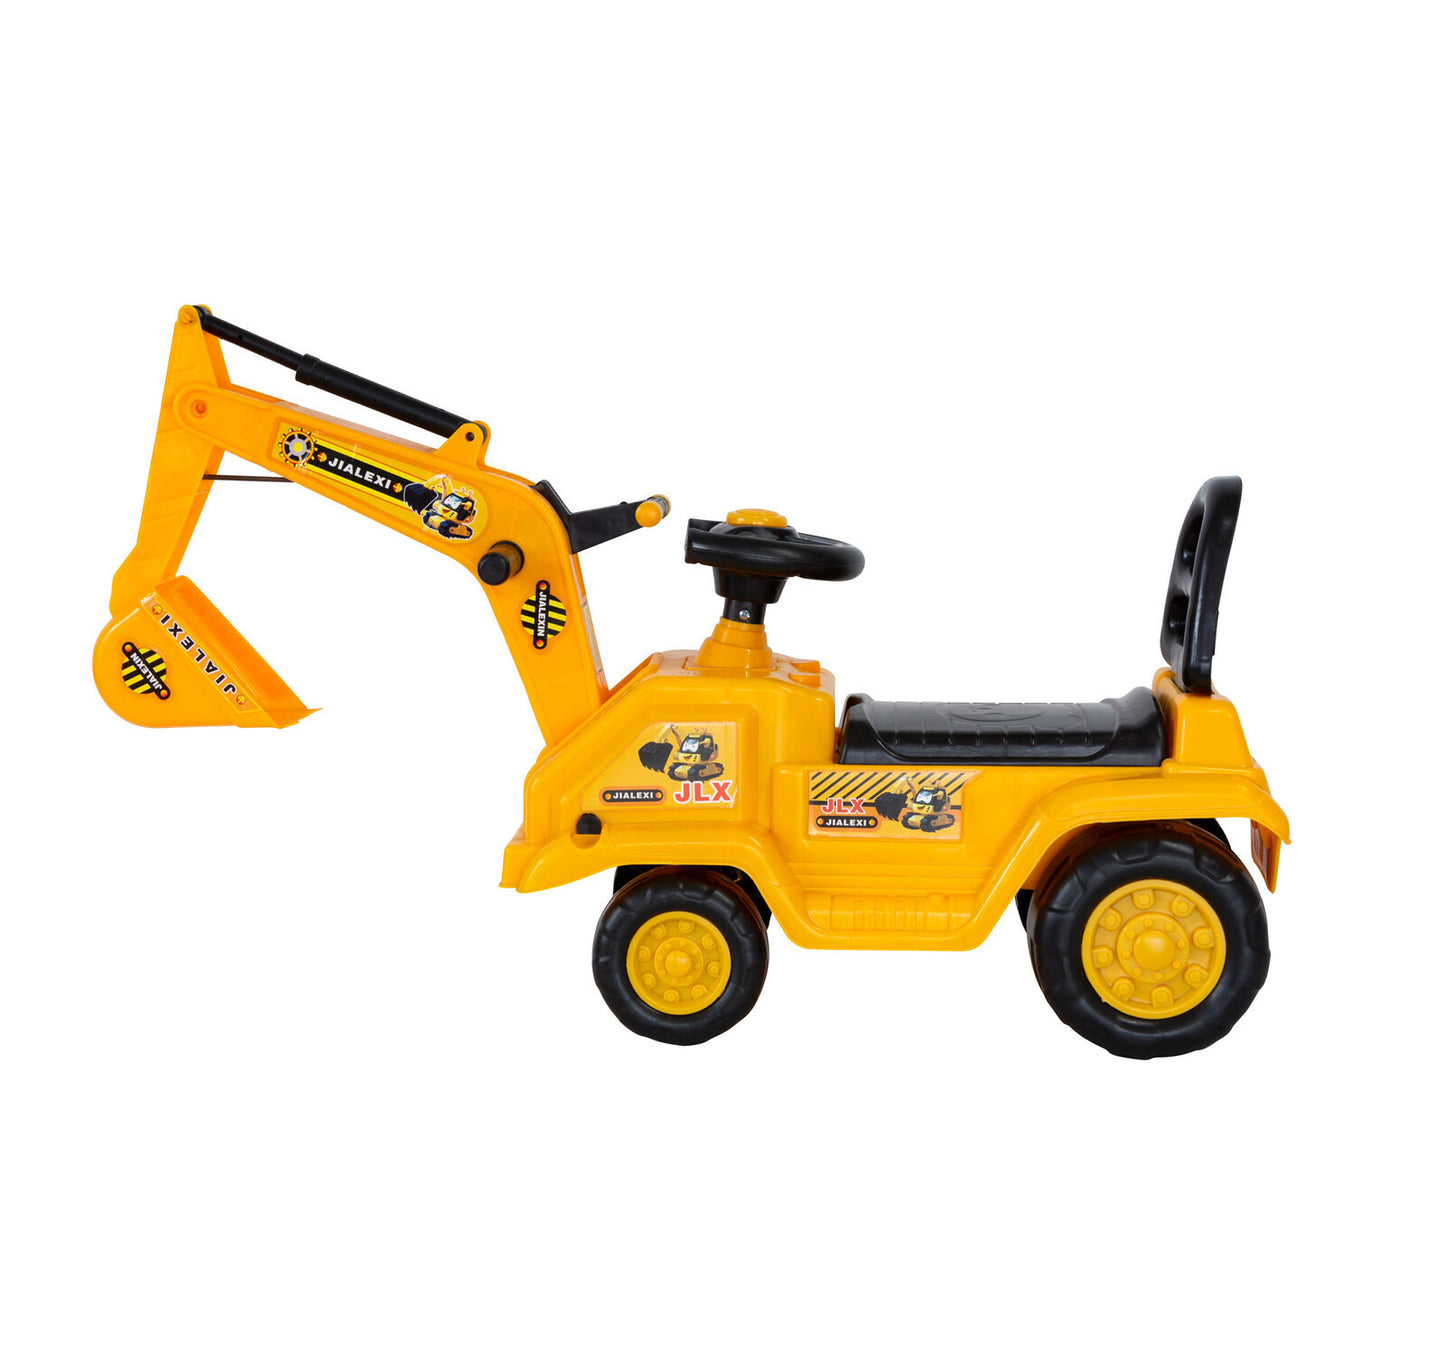 Ride-on Children's Toy Excavator Truck - Yellow